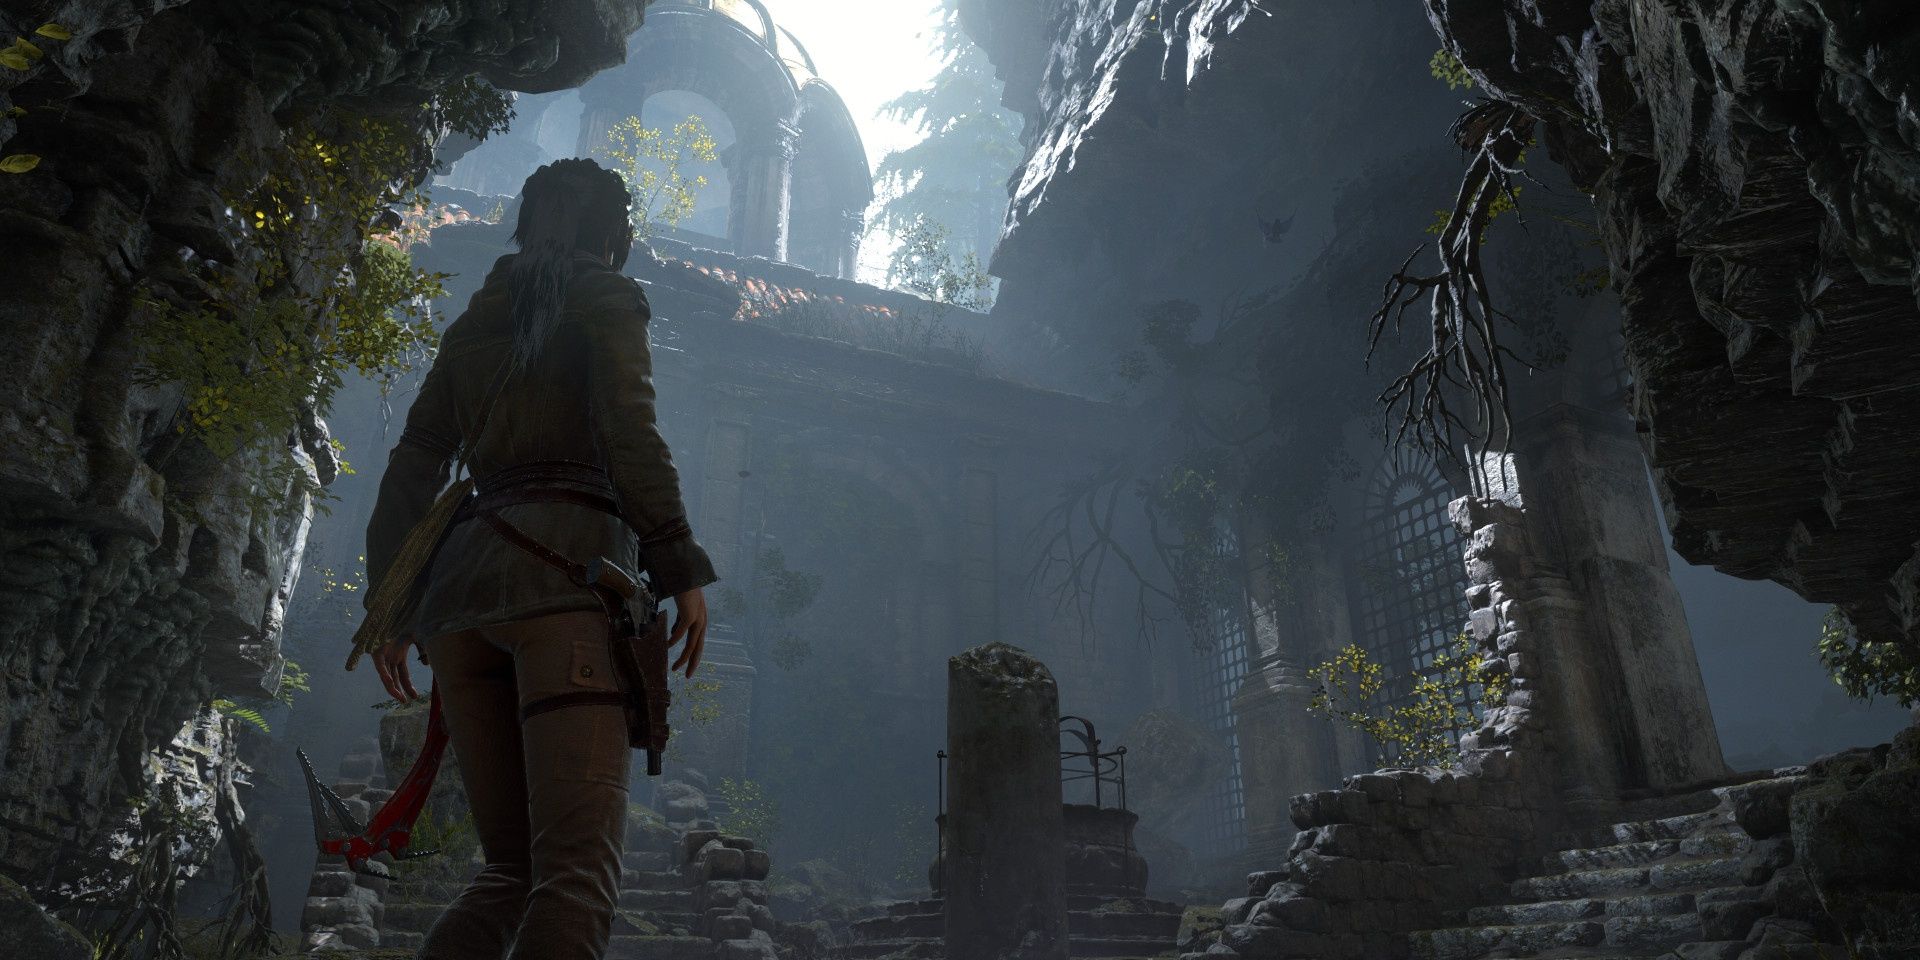 Lara Croft looking at ruins in Rise of the Tomb Raider